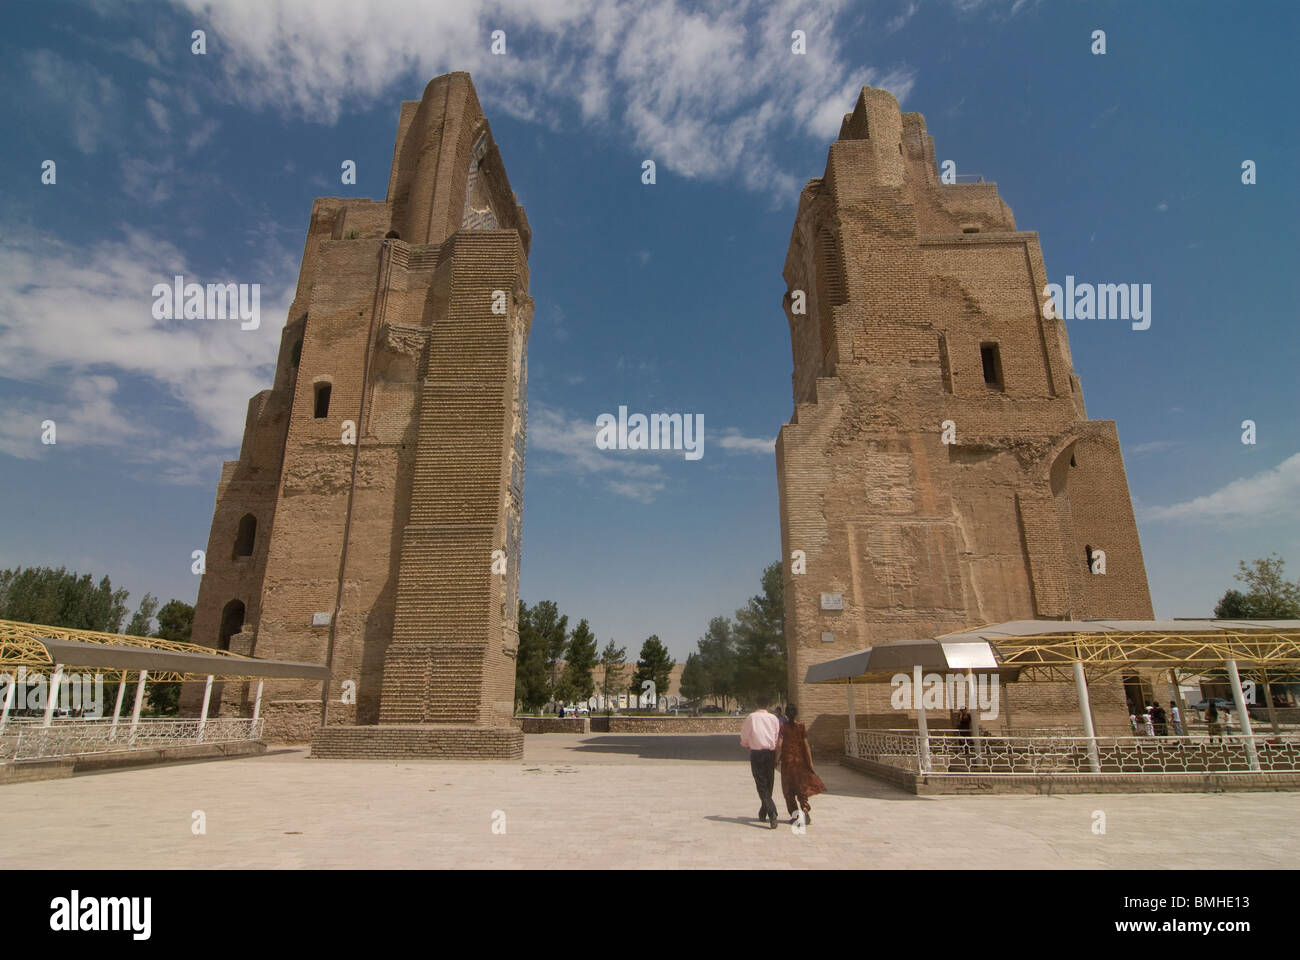 Palazzo Ak-Saray, Timur's Summer Palace, Shakrisabz, Uzbekistan Foto Stock